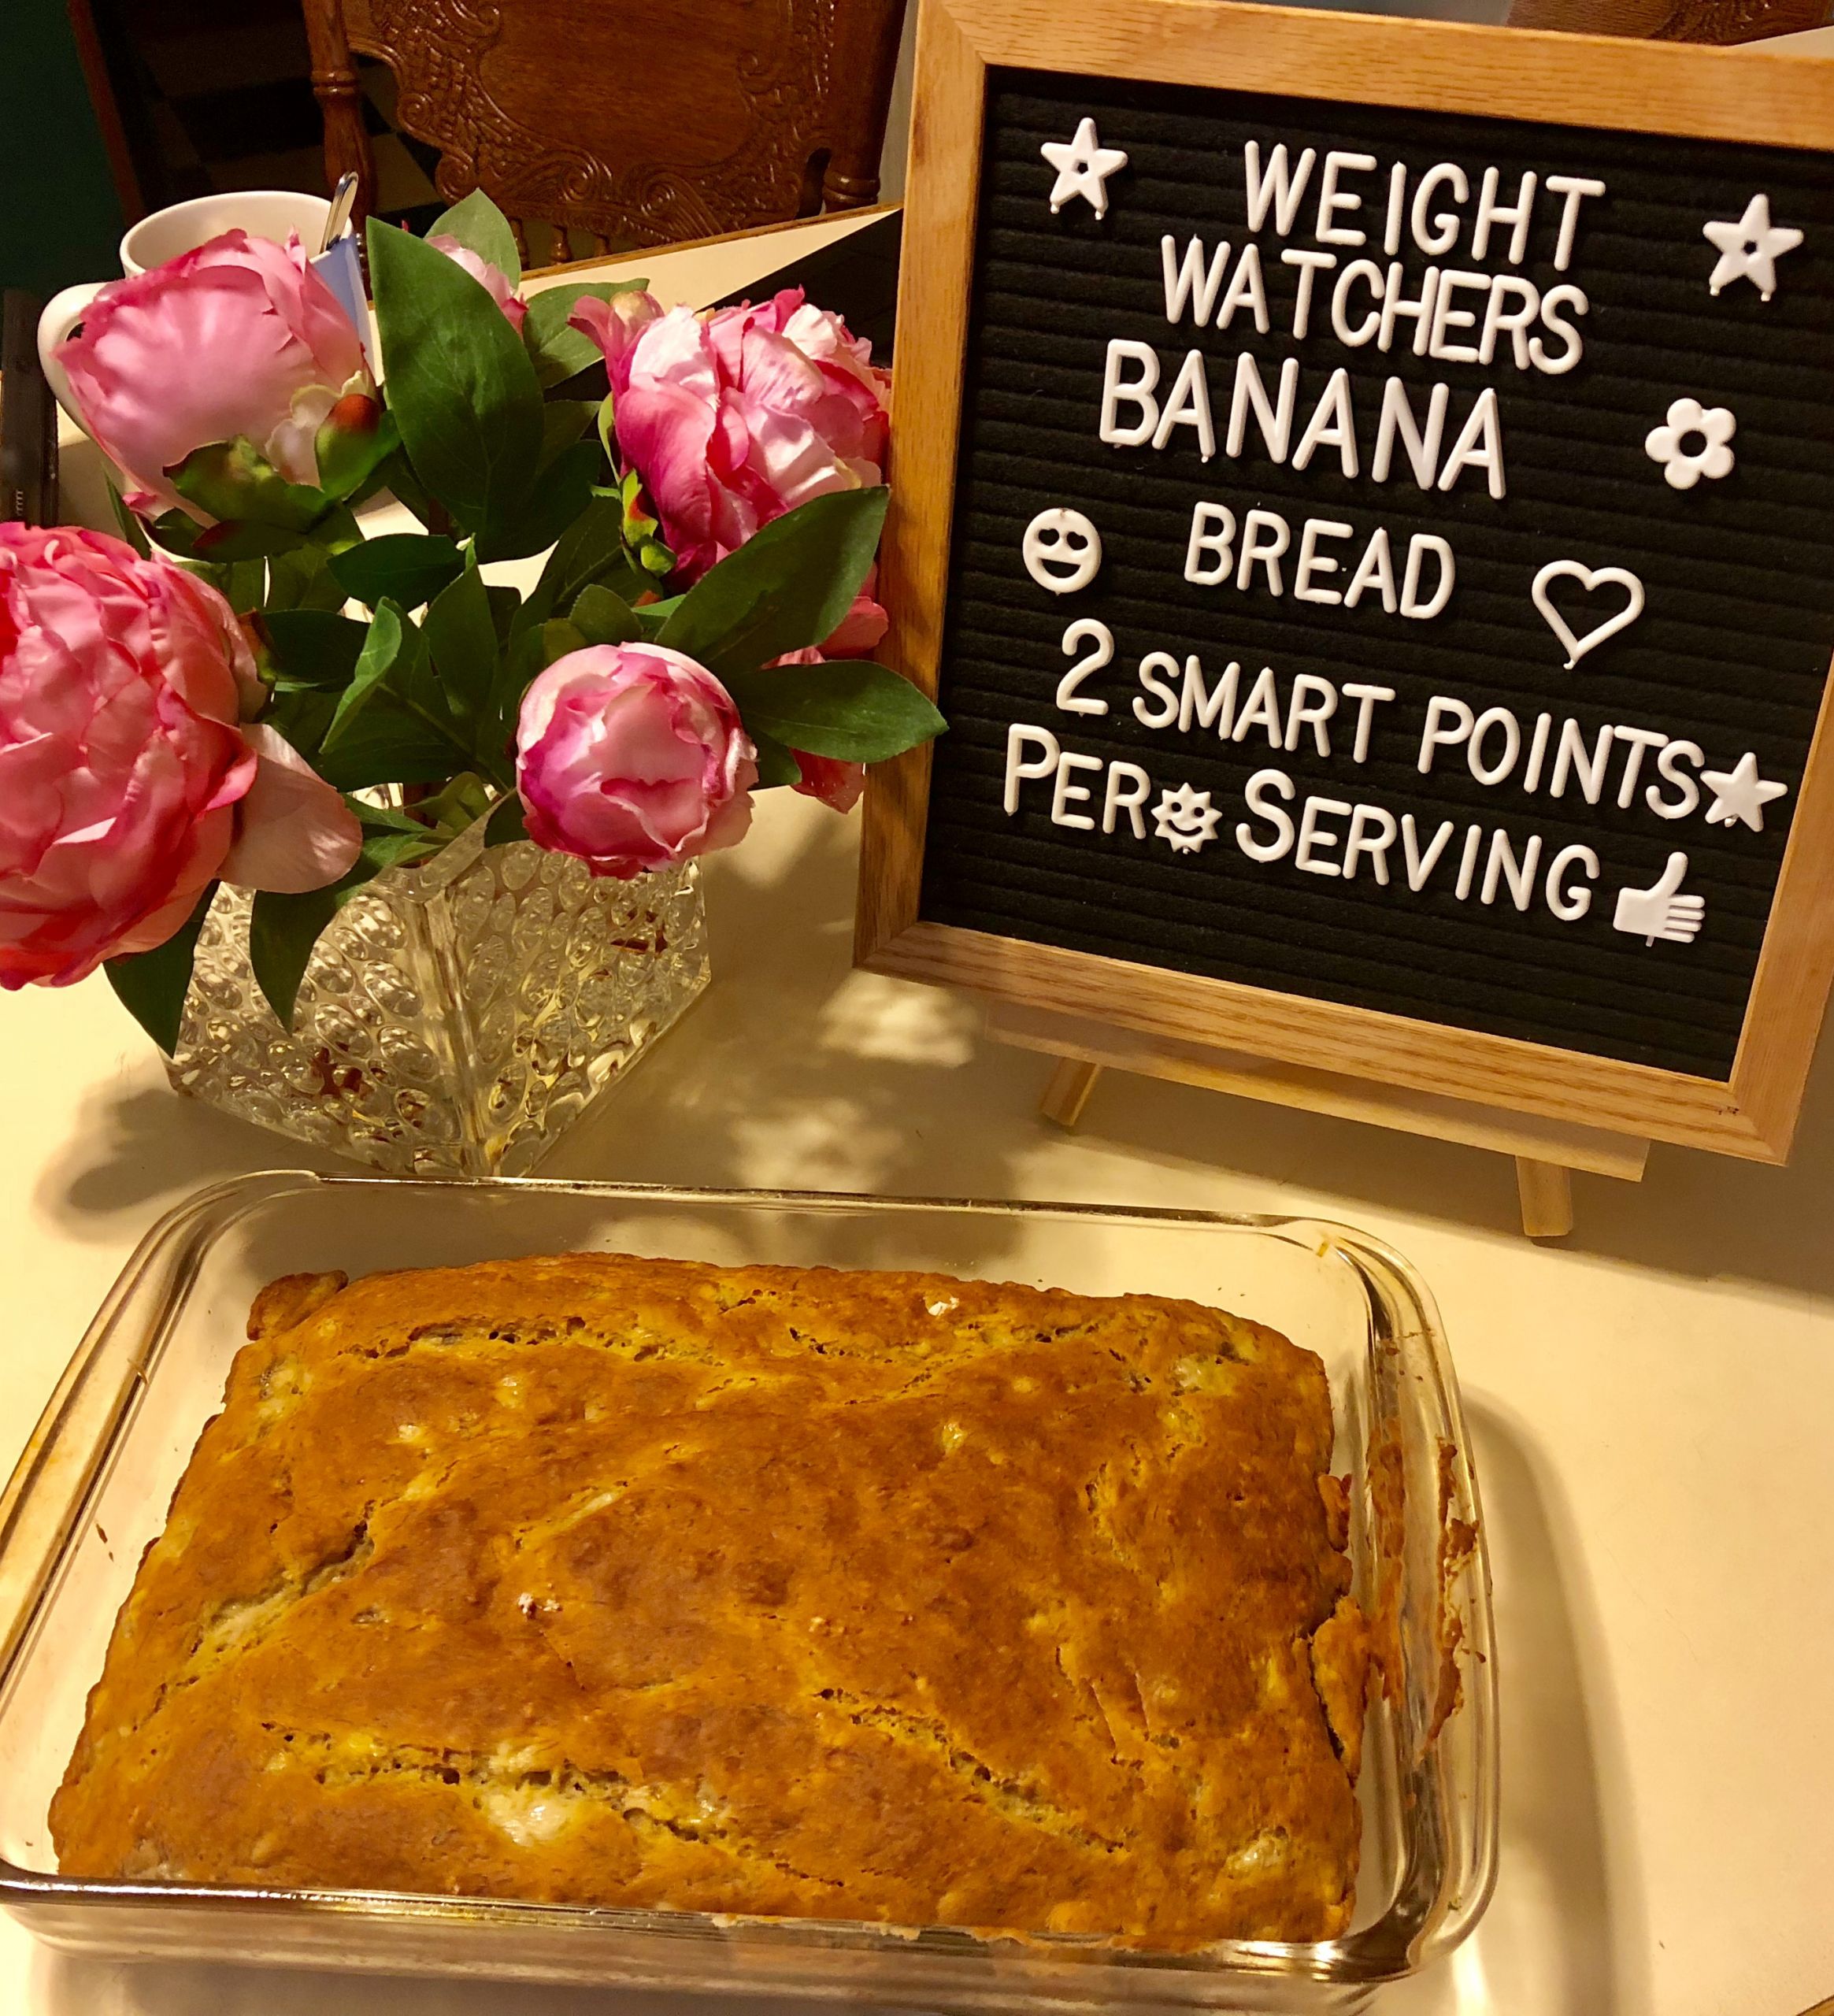 Weight Watchers Banana Bread Recipe
 Weight Watchers Banana Bread Recipe just 2 points per